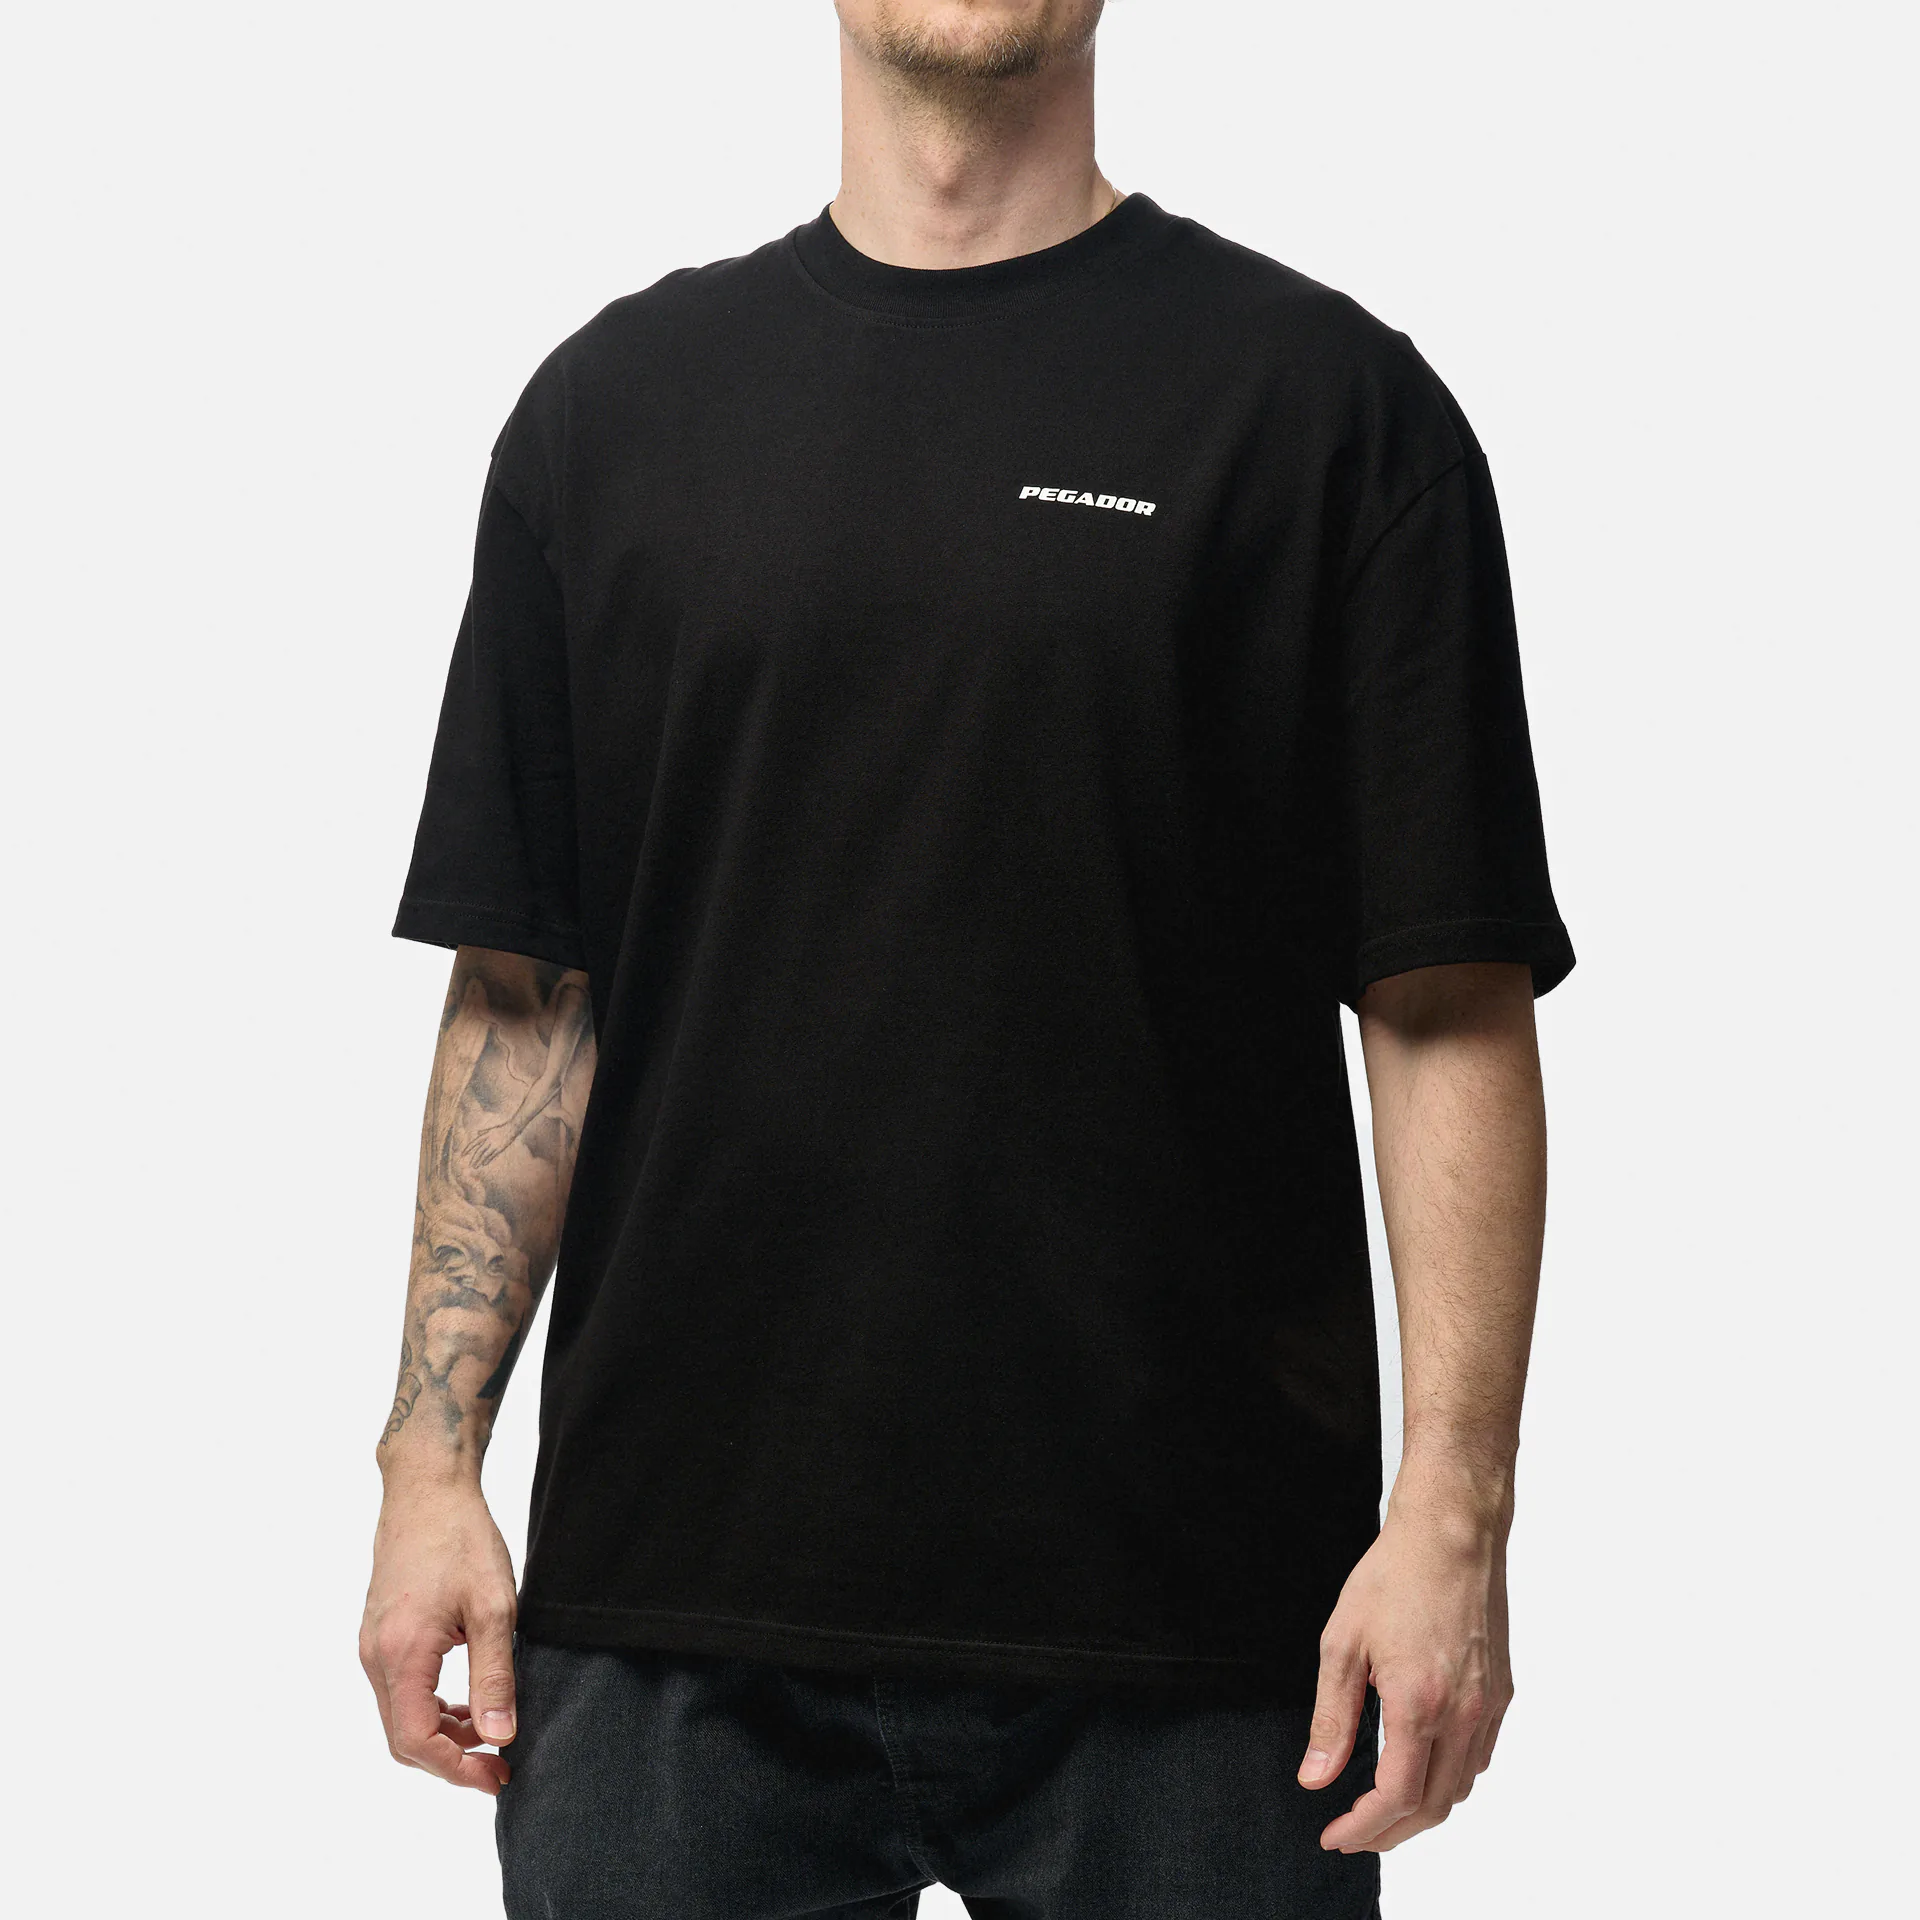 PEGADOR Logo Oversized T-Shirt Washed Black/White/Gum